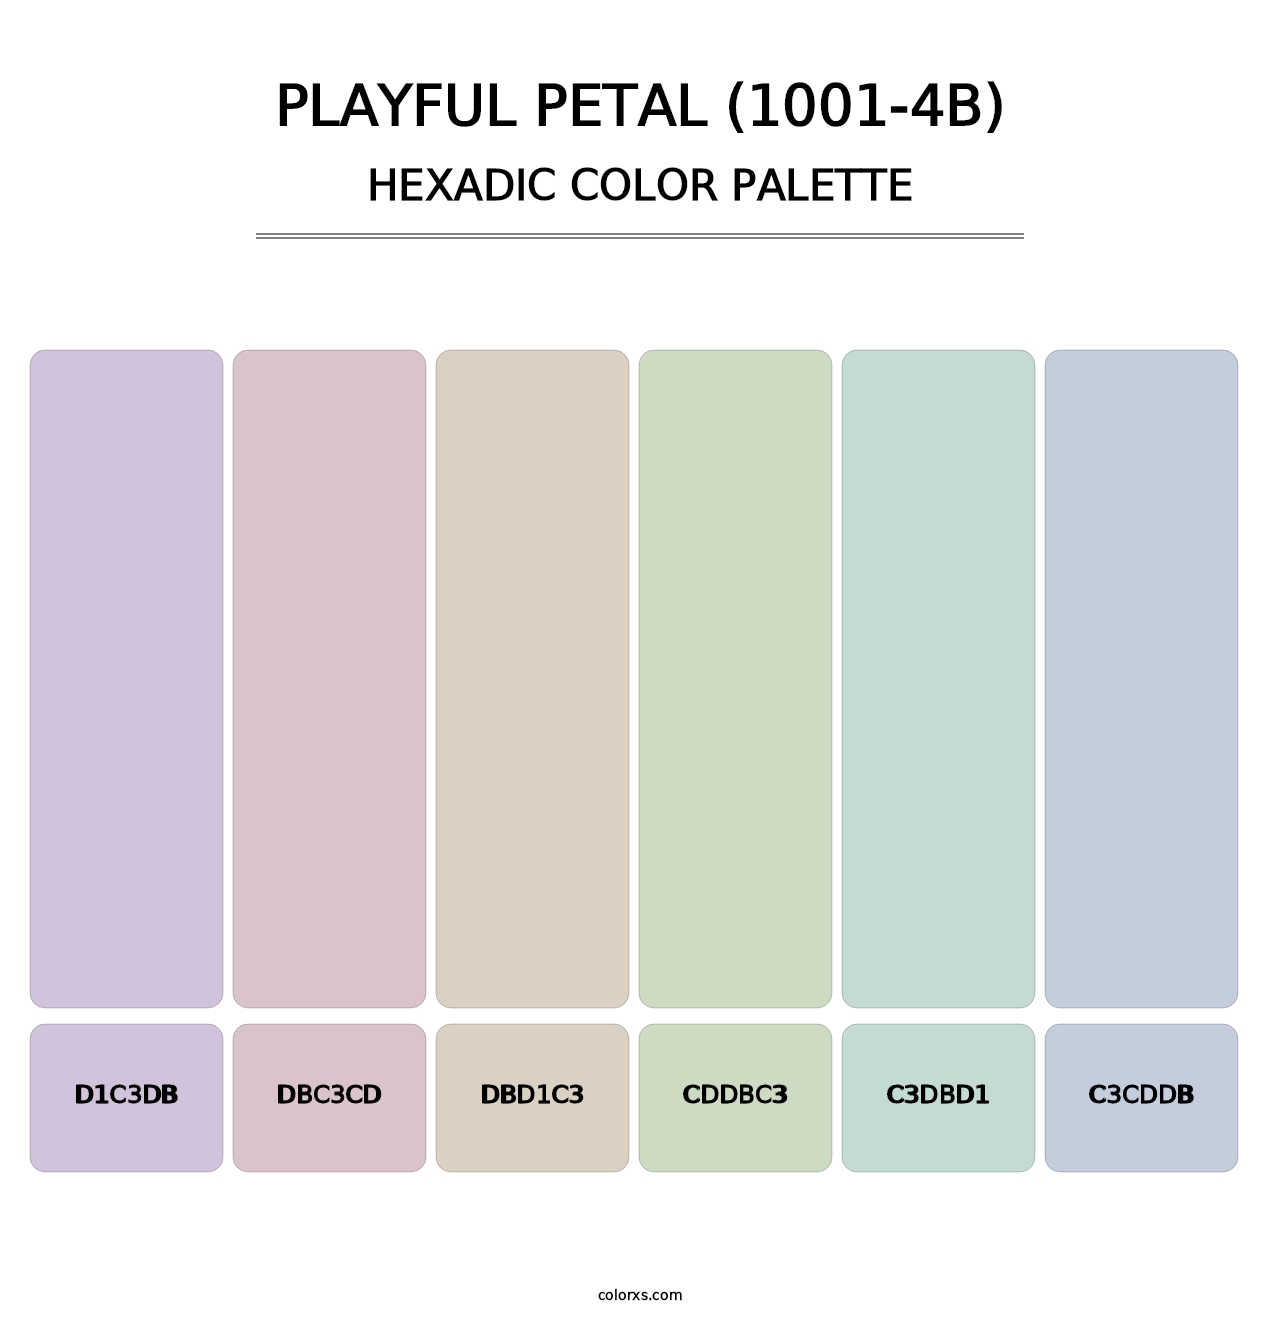 Playful Petal (1001-4B) - Hexadic Color Palette